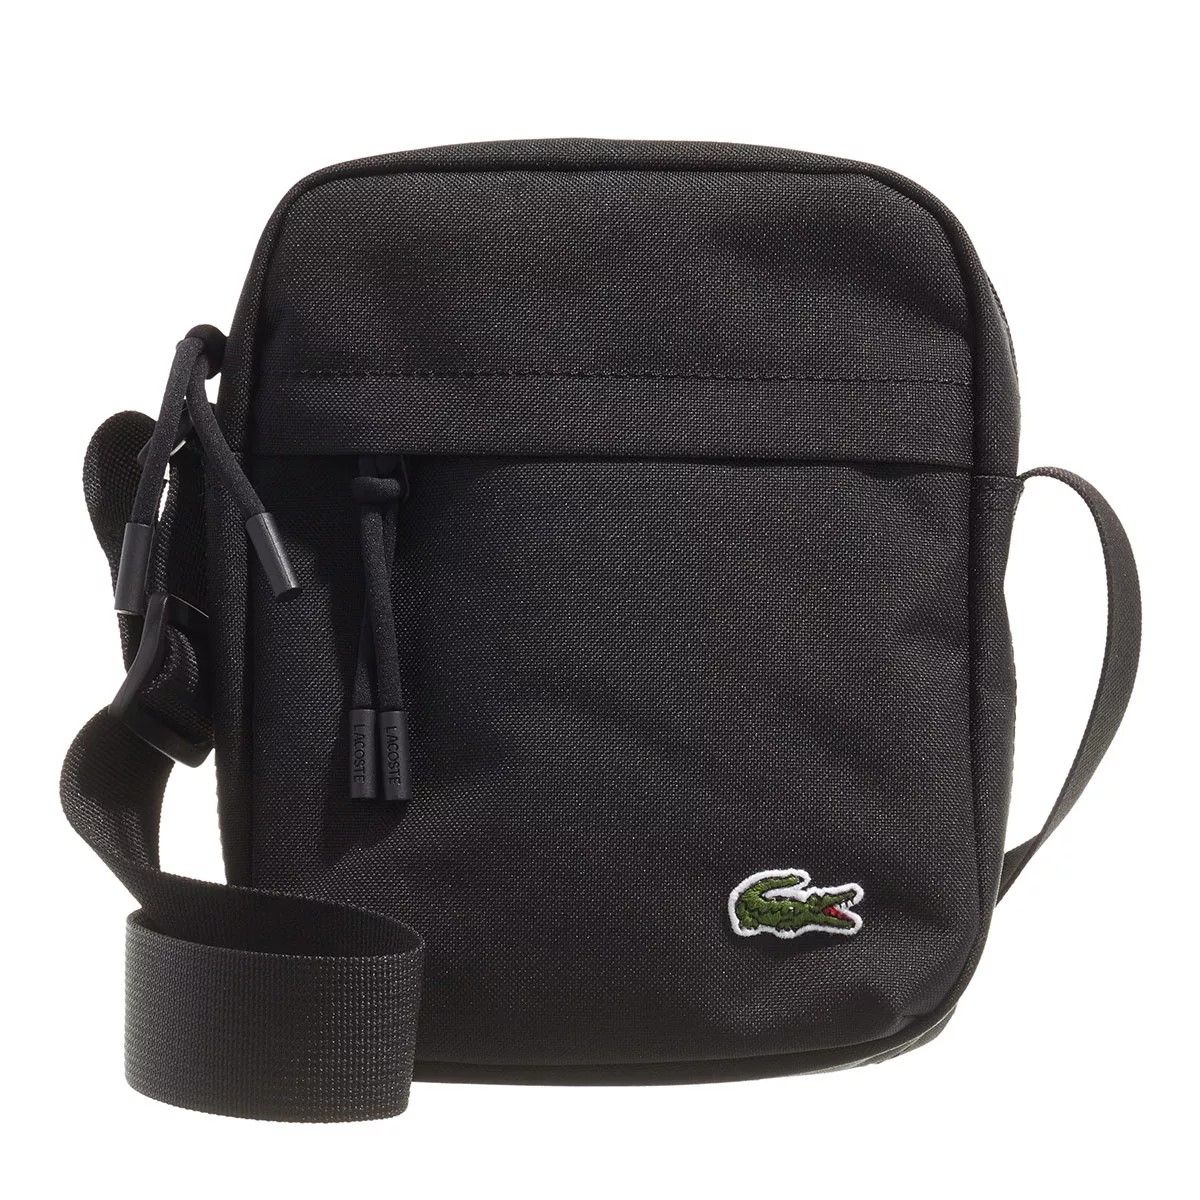 Lacoste Unisex Zip Crossover Bag Black NH4102NE-991